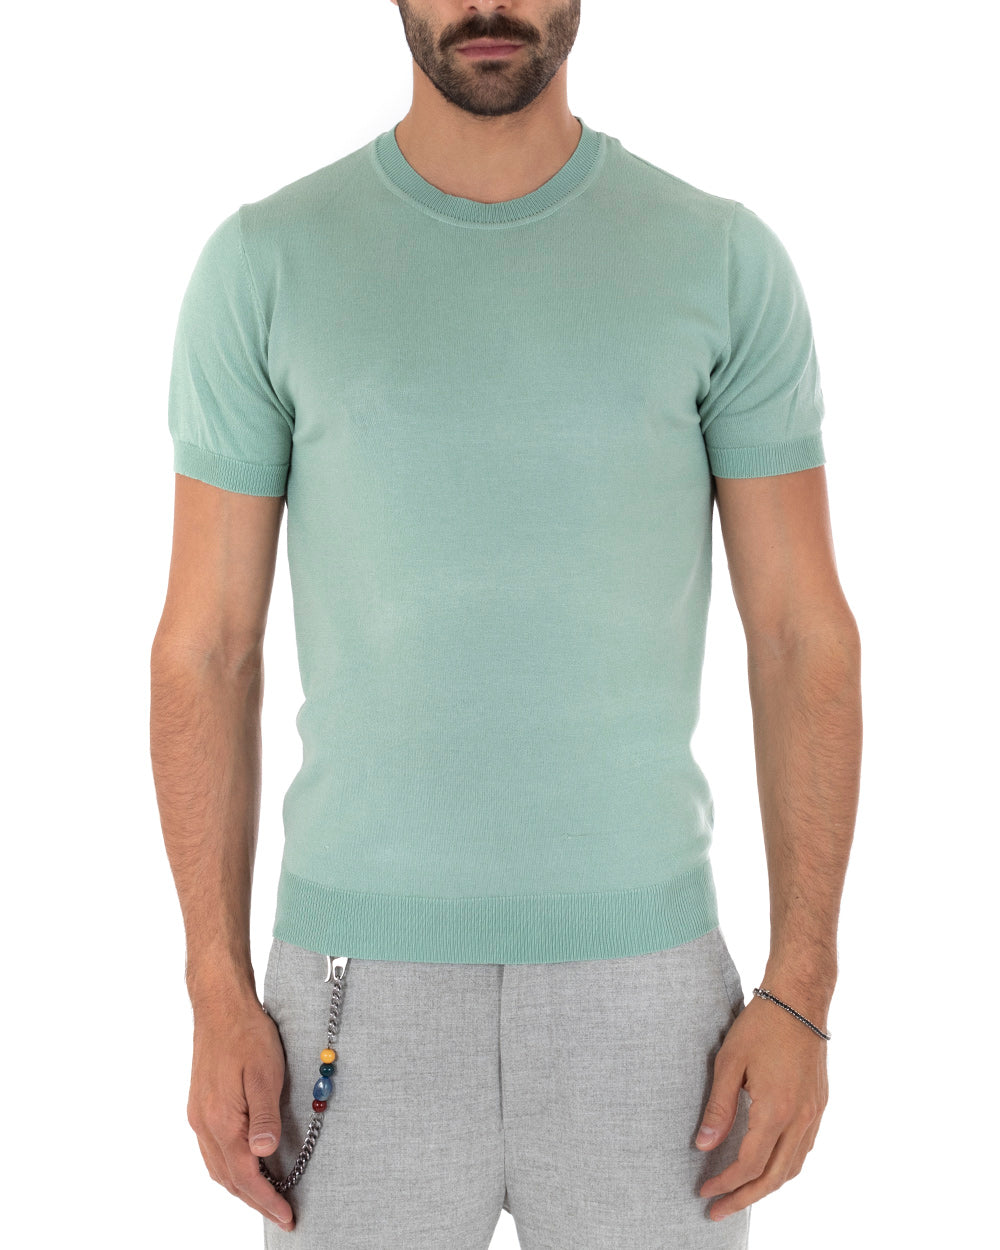 T-Shirt Uomo Manica Corta Tinta Unita Verde Salvia Girocollo Filo Casual GIOSAL-TS3050A